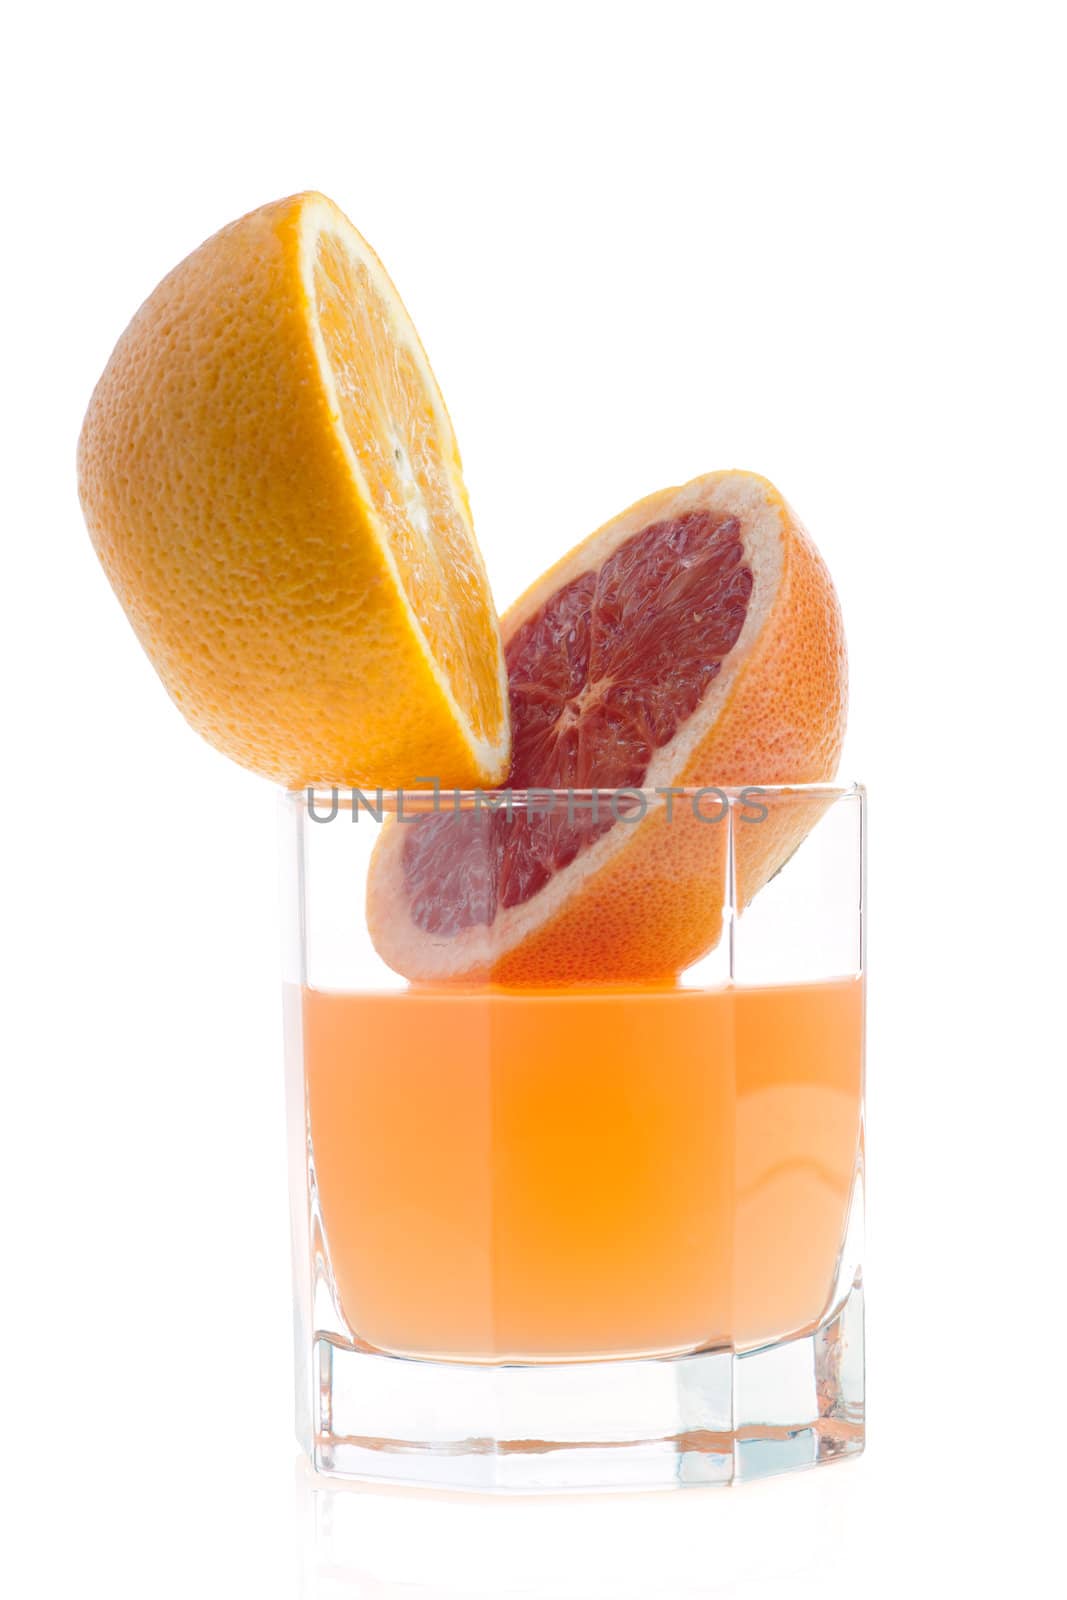 Grapefruit, orange and juice by Marcus